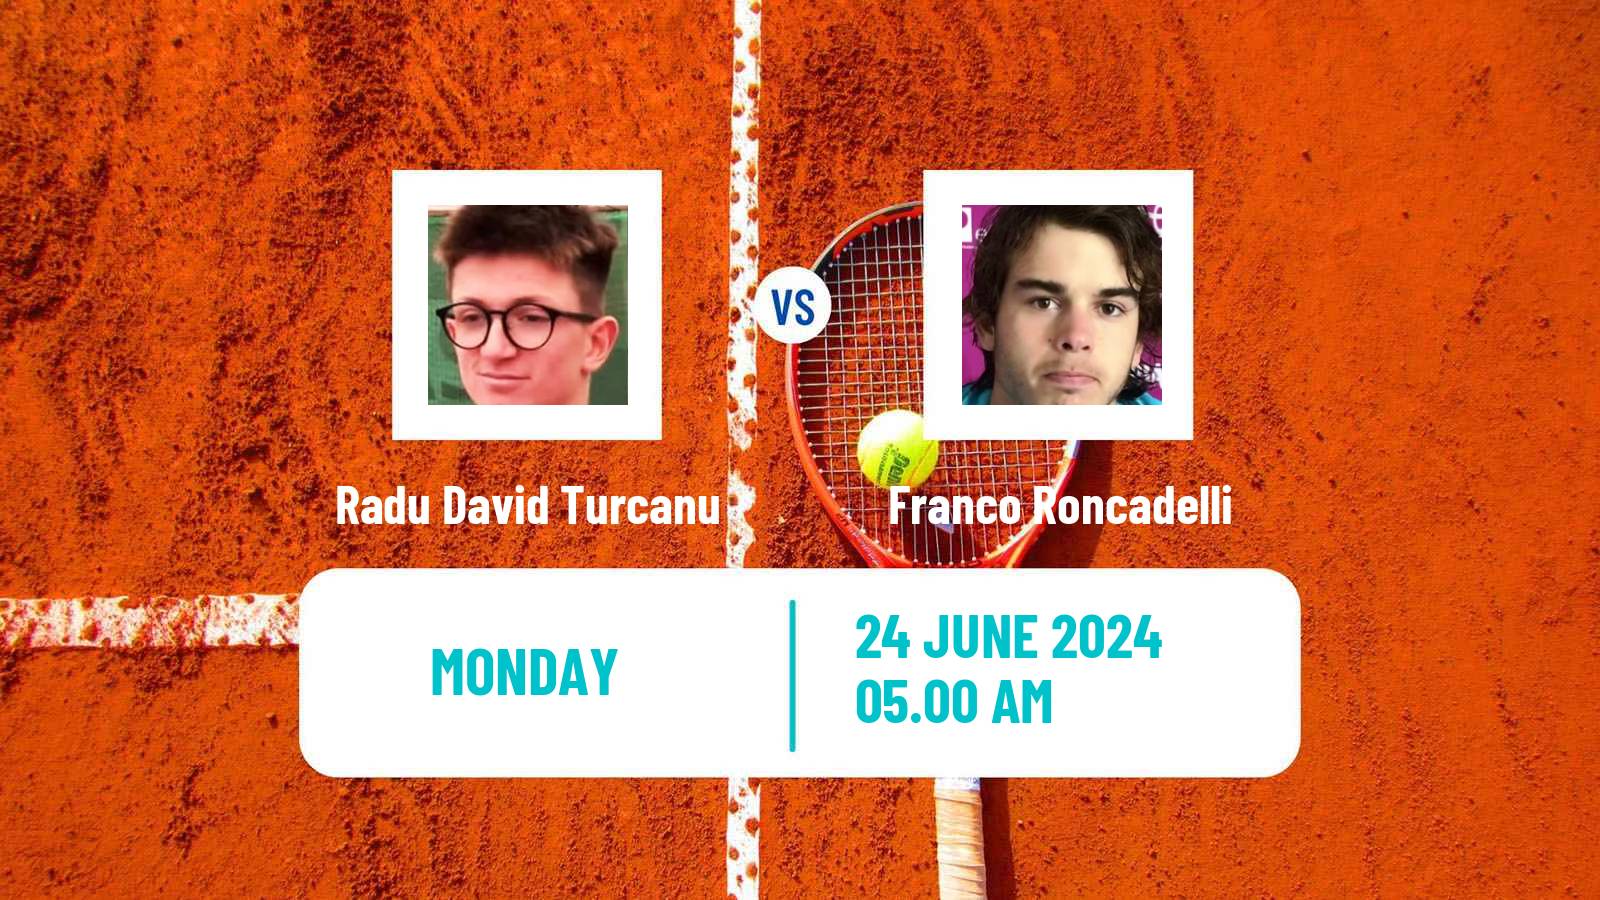 Tennis ITF M25 Satu Mare Men 2024 Radu David Turcanu - Franco Roncadelli